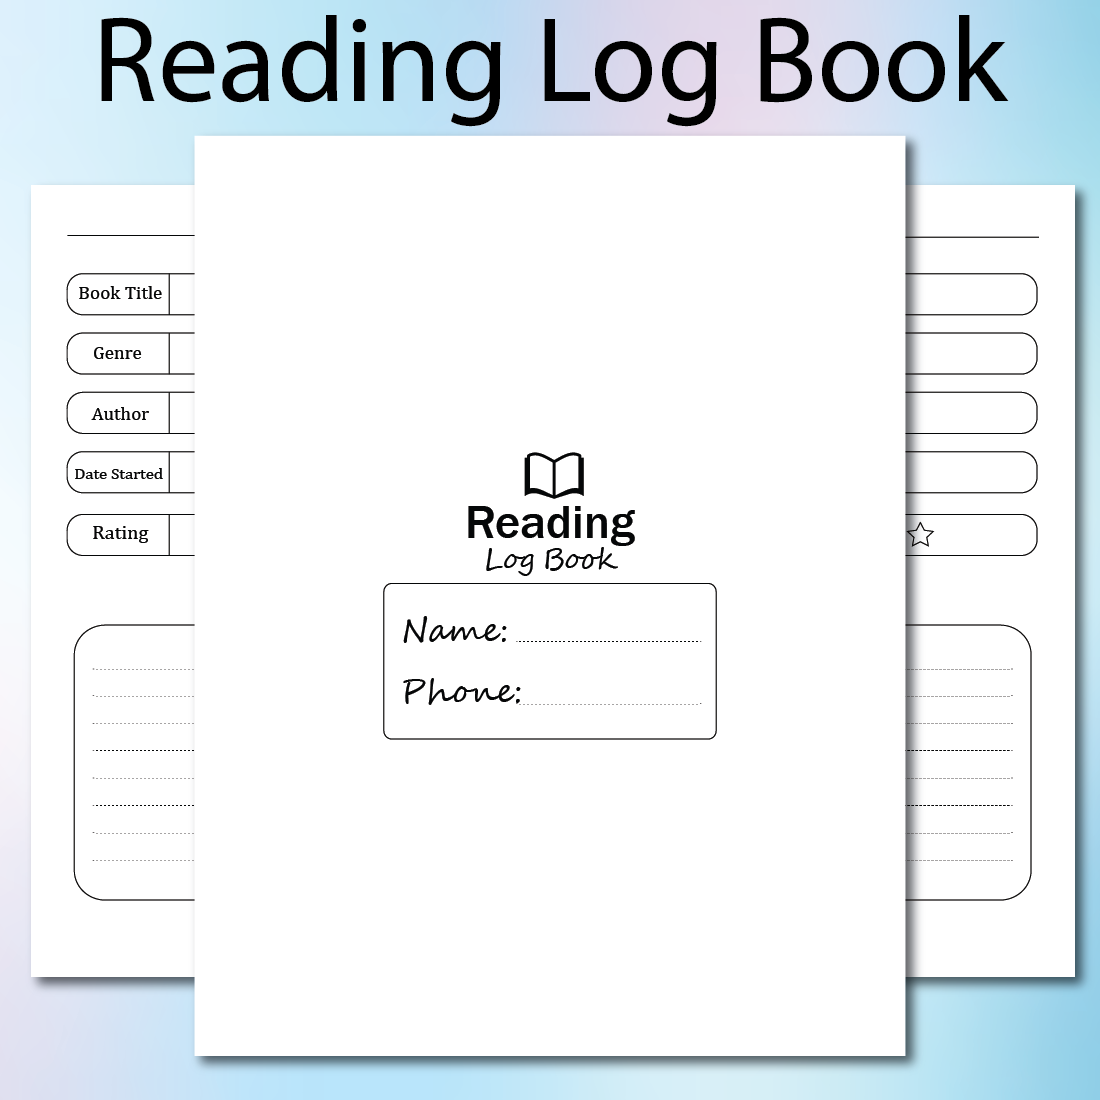 Reading Log Book / Kdp Interior cover image.